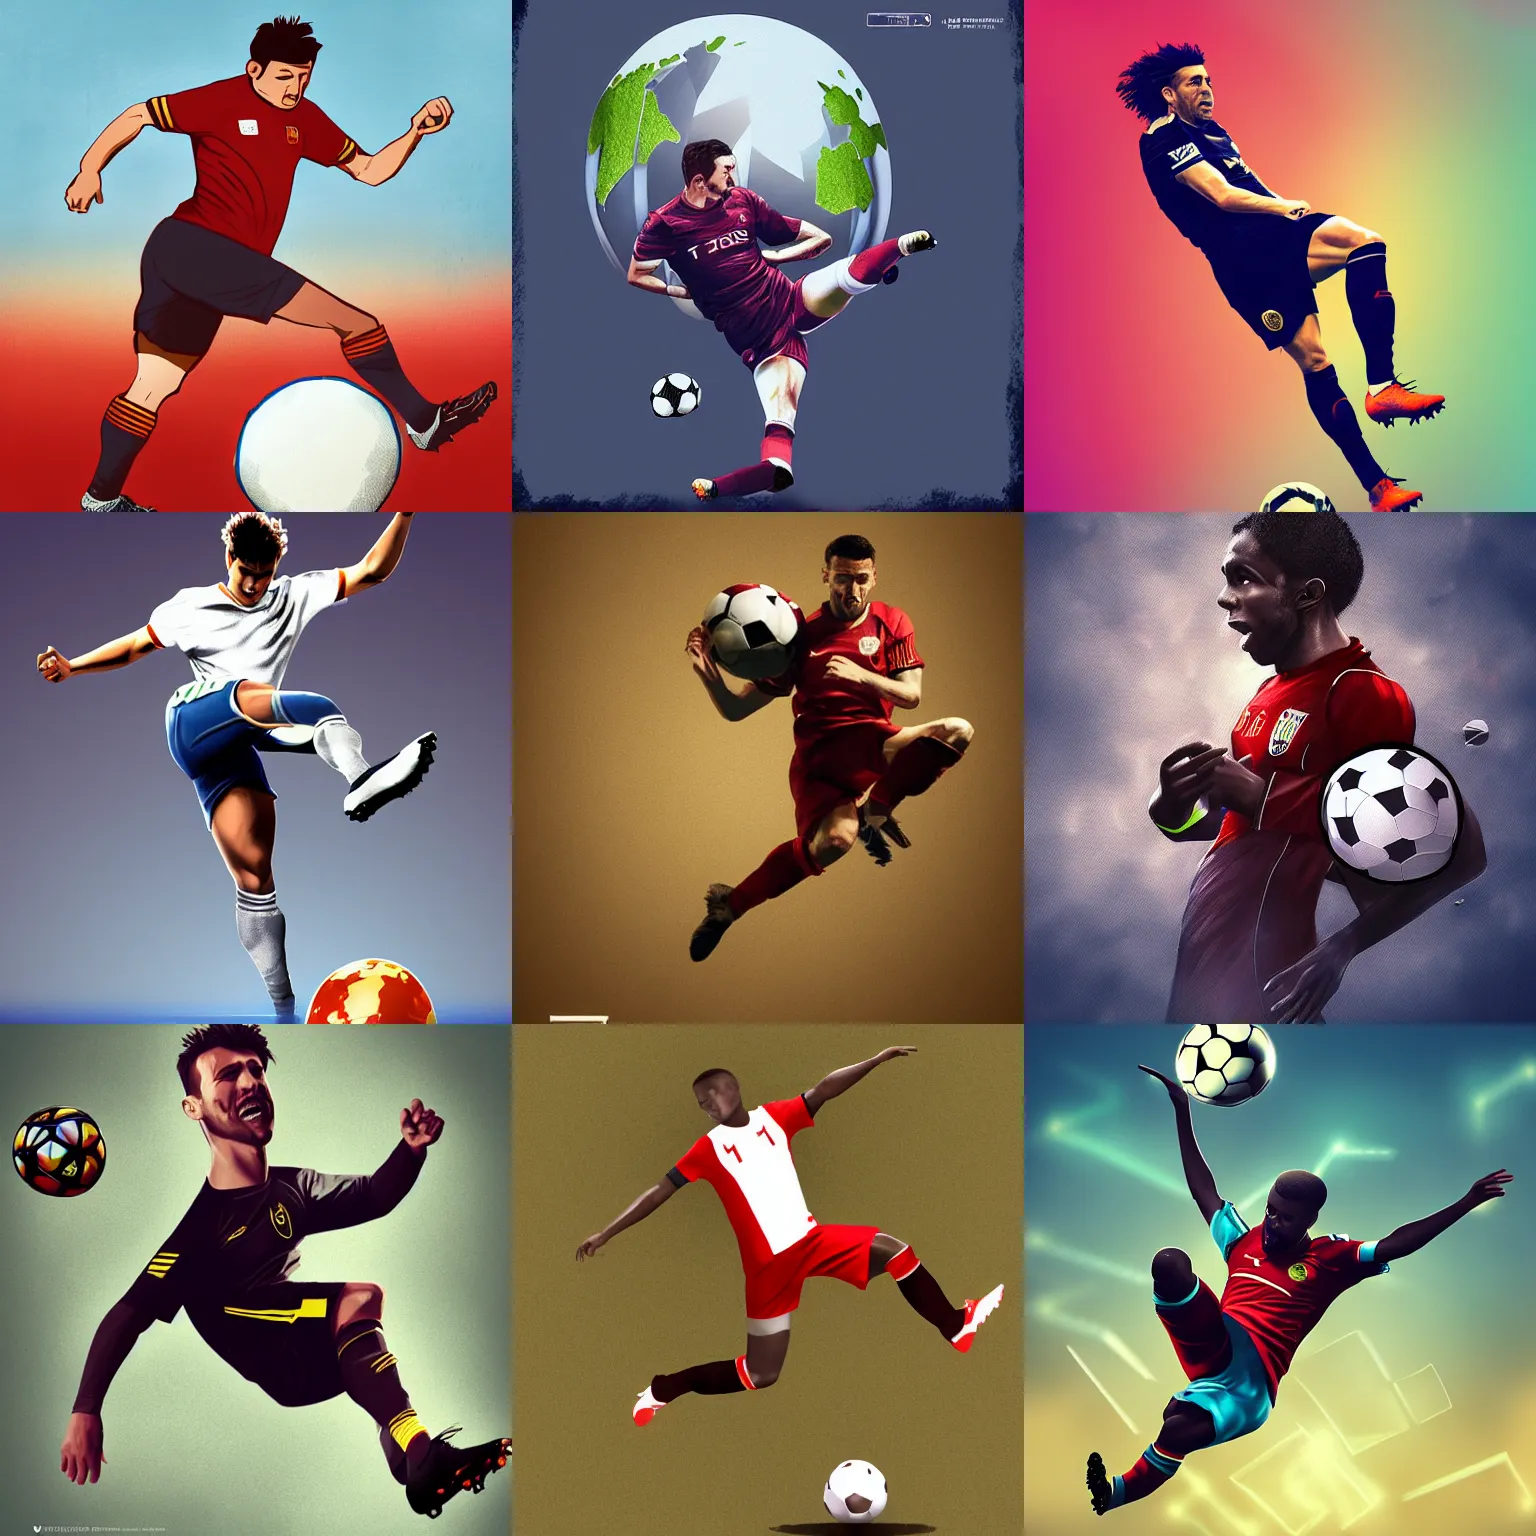 Prompt: A footballer kicking a globe, digital art, trending on ArtStation